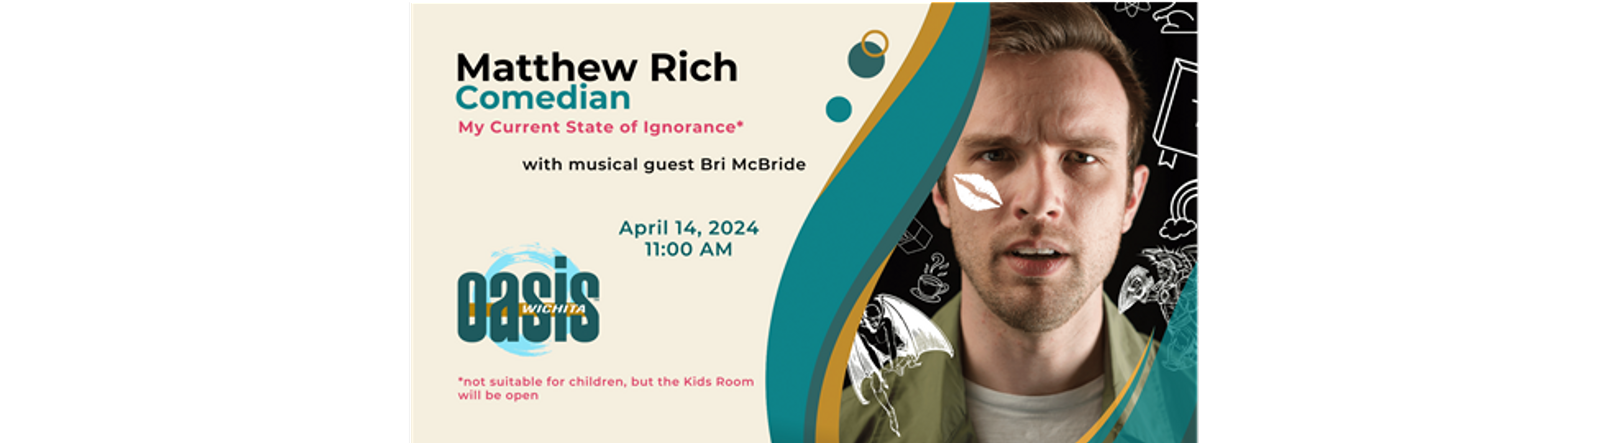 Matthew Rich, Comedian | Musical Guest: Bri McBride